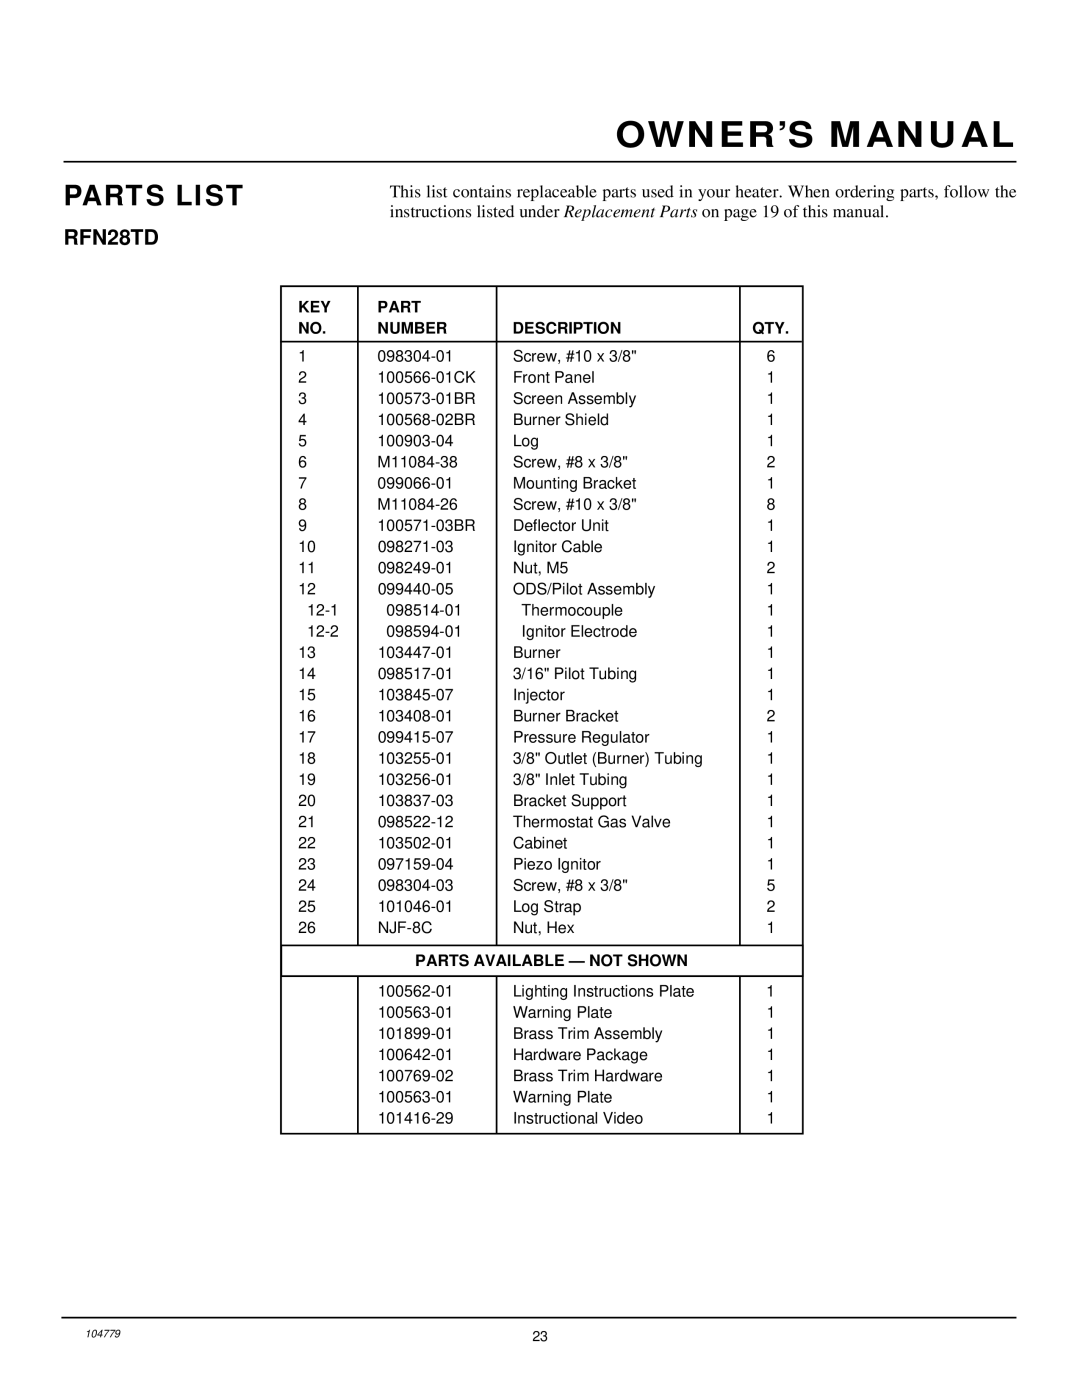 Desa Tech RFN28TD installation manual Parts List, KEY Part Number Description QTY 